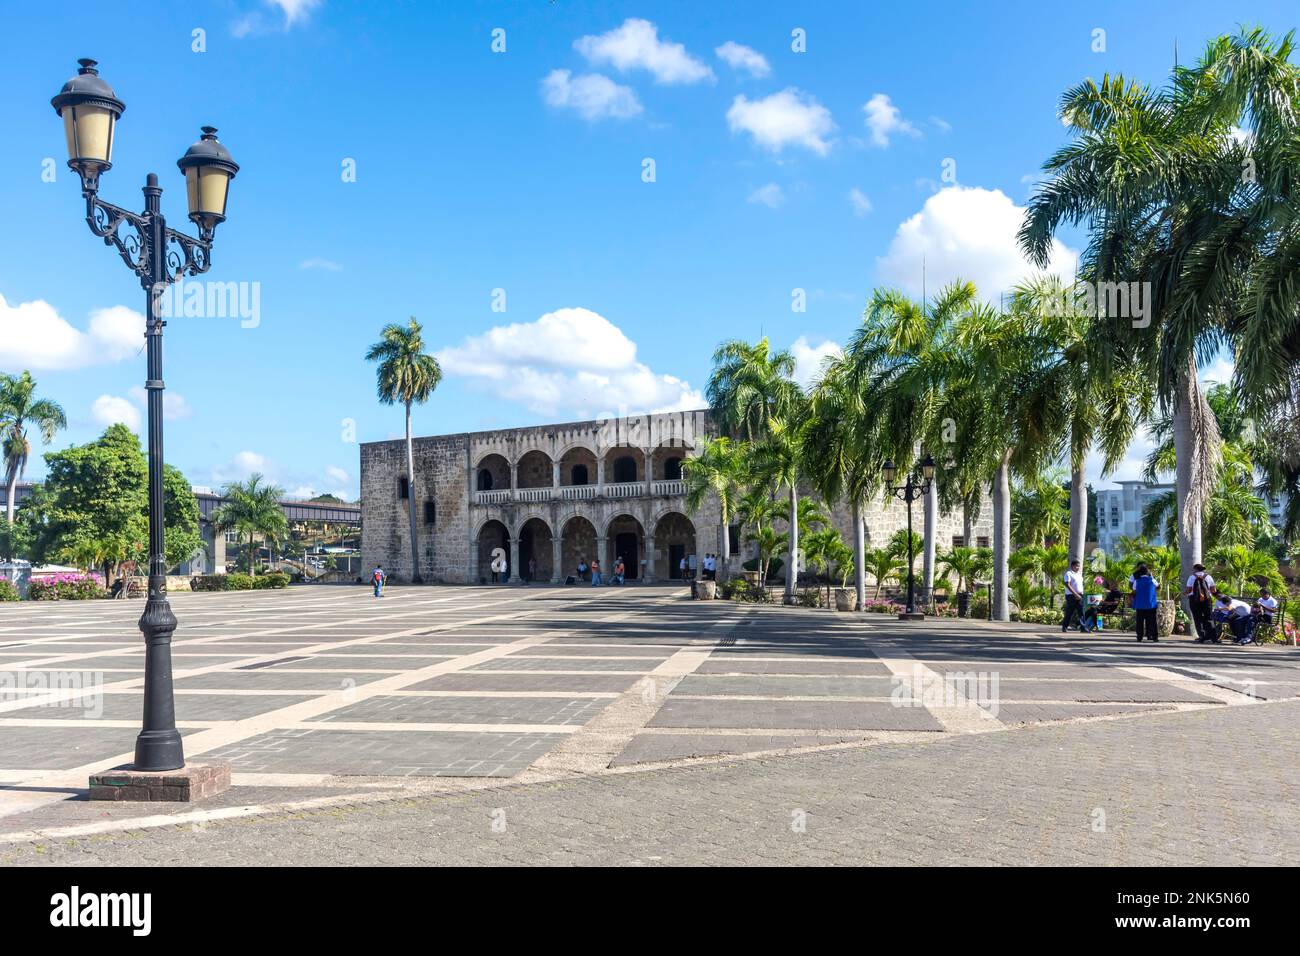 Alcázar de Colón, Plaza de la Espana de la Hispanidad, Santo Domingo, République dominicaine (Republica Dominicana), grandes Antilles, Caraïbes Banque D'Images